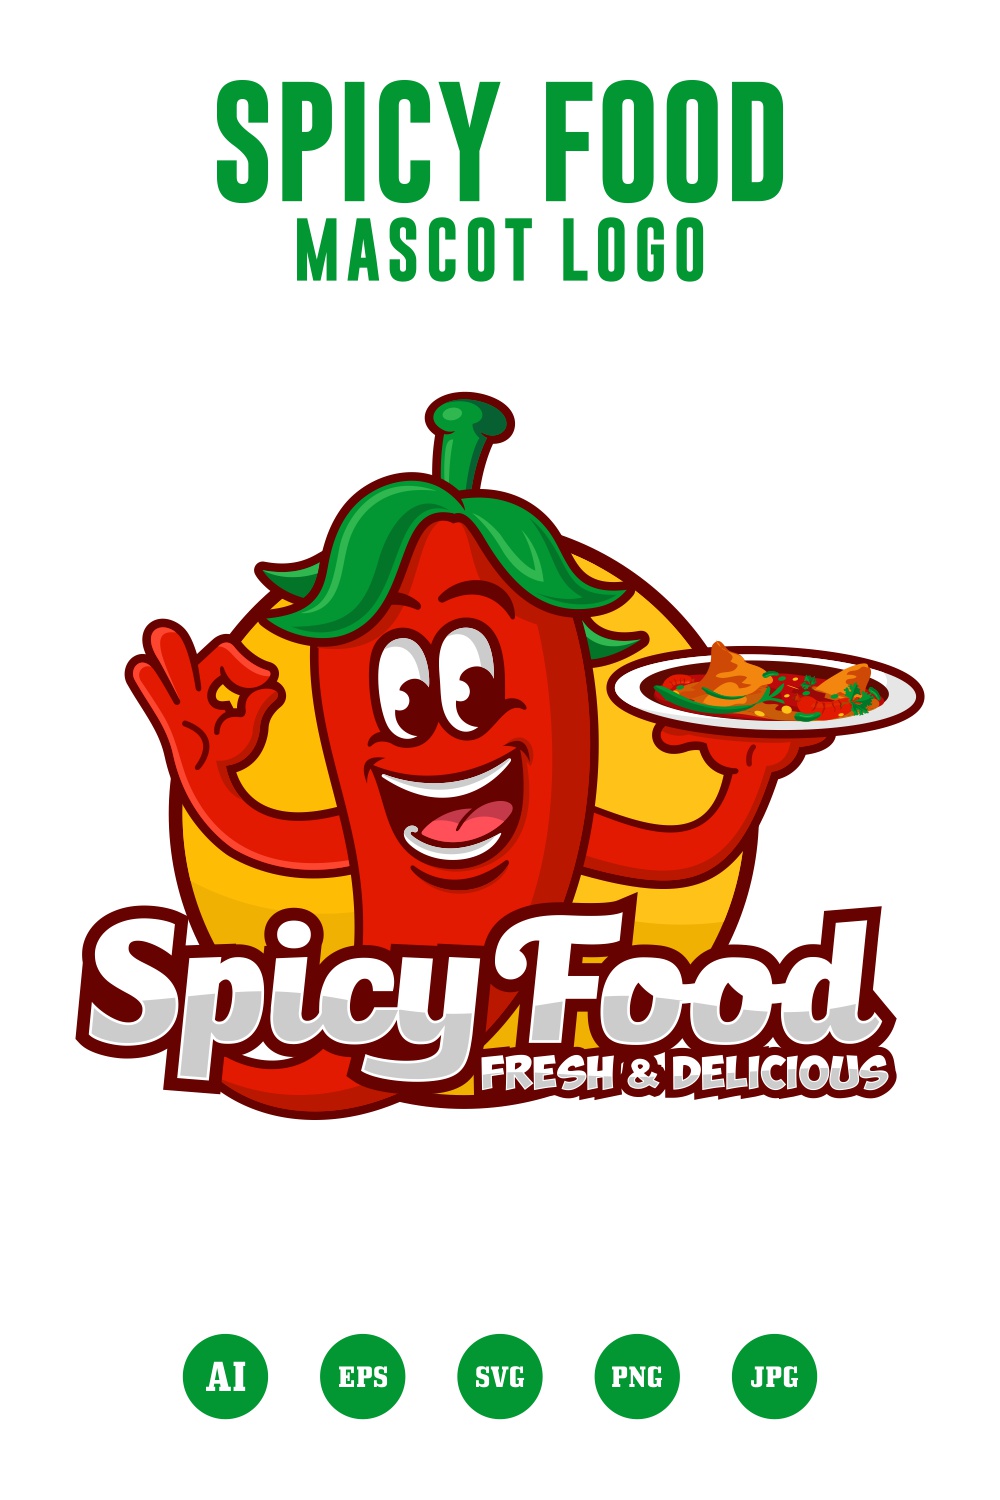 Spicy food logo design illustration - $6 pinterest preview image.